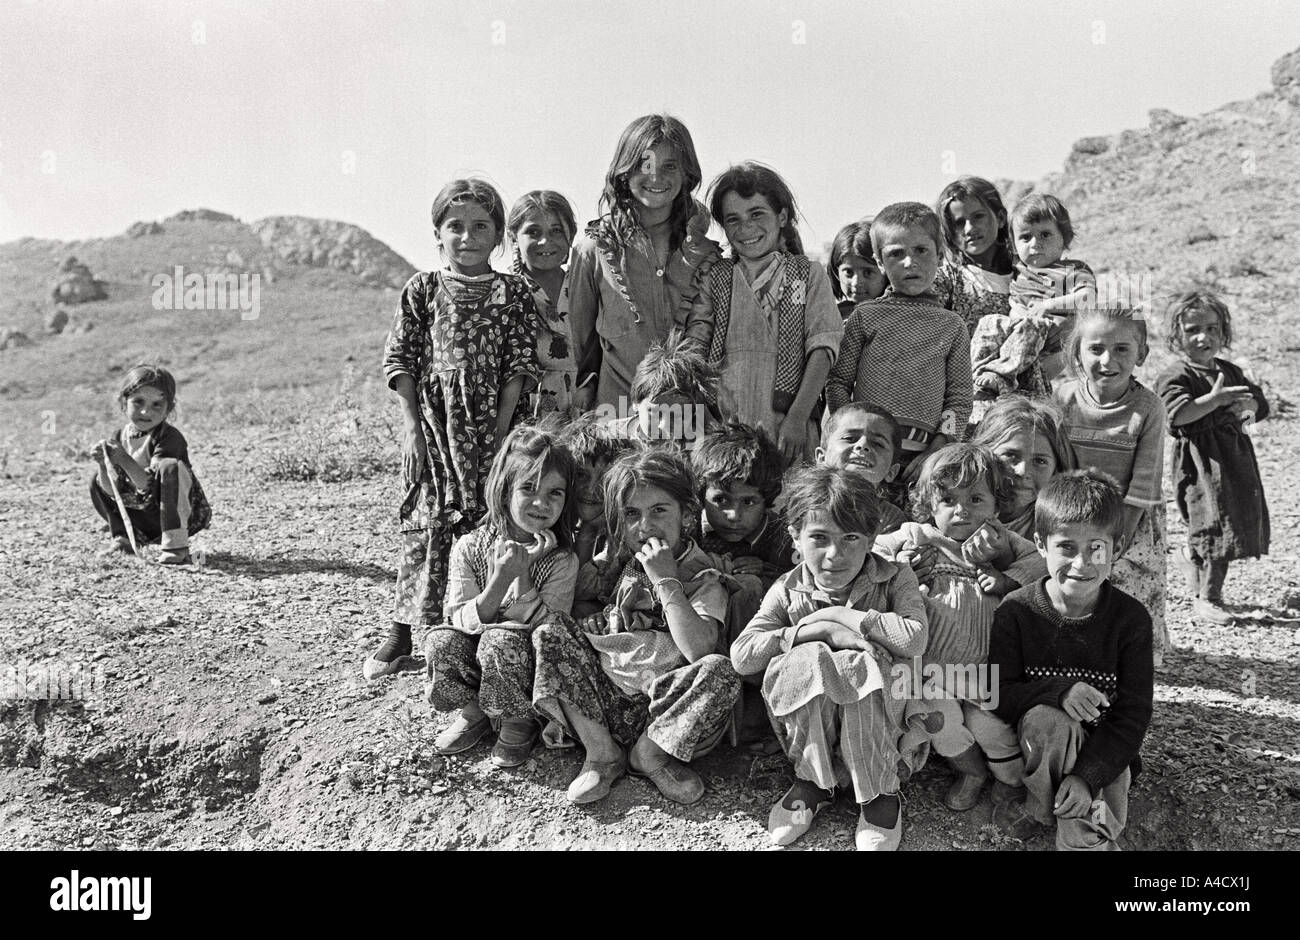 July 1987 Iraq Turkey border Kurdistan Kurdish children at a summer pasture mountain encampment Photo by Richard Wayman Stock Photo